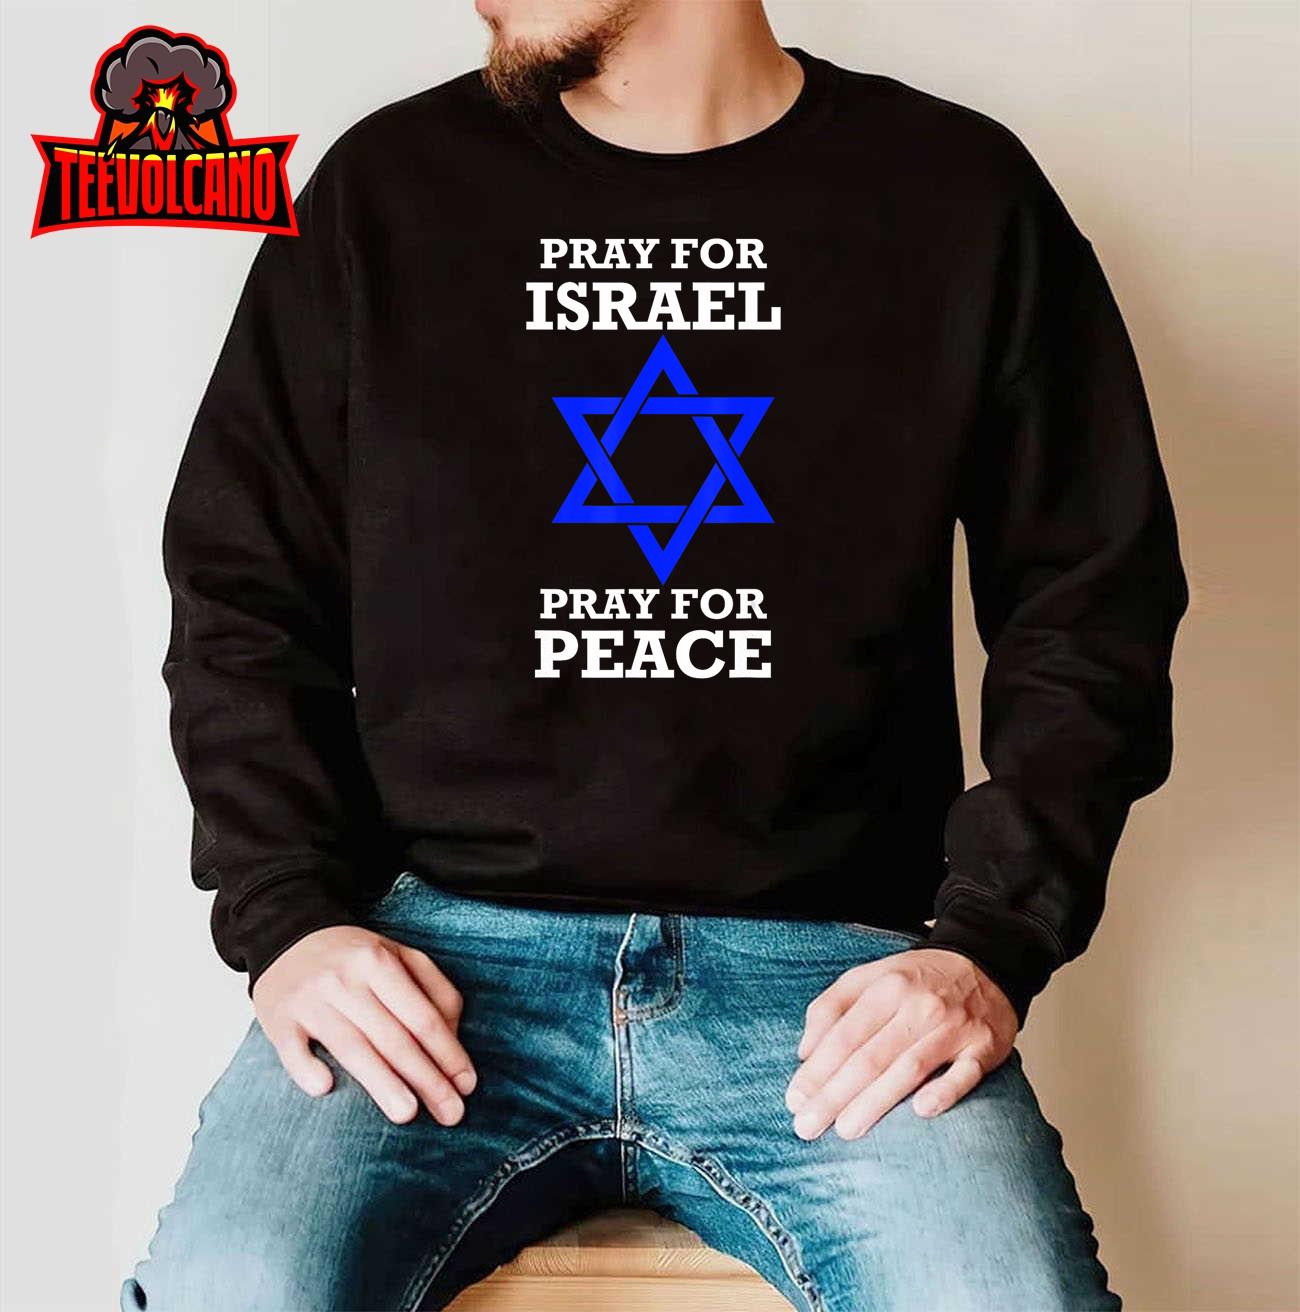 Pray For Israel Peace T-Shirt